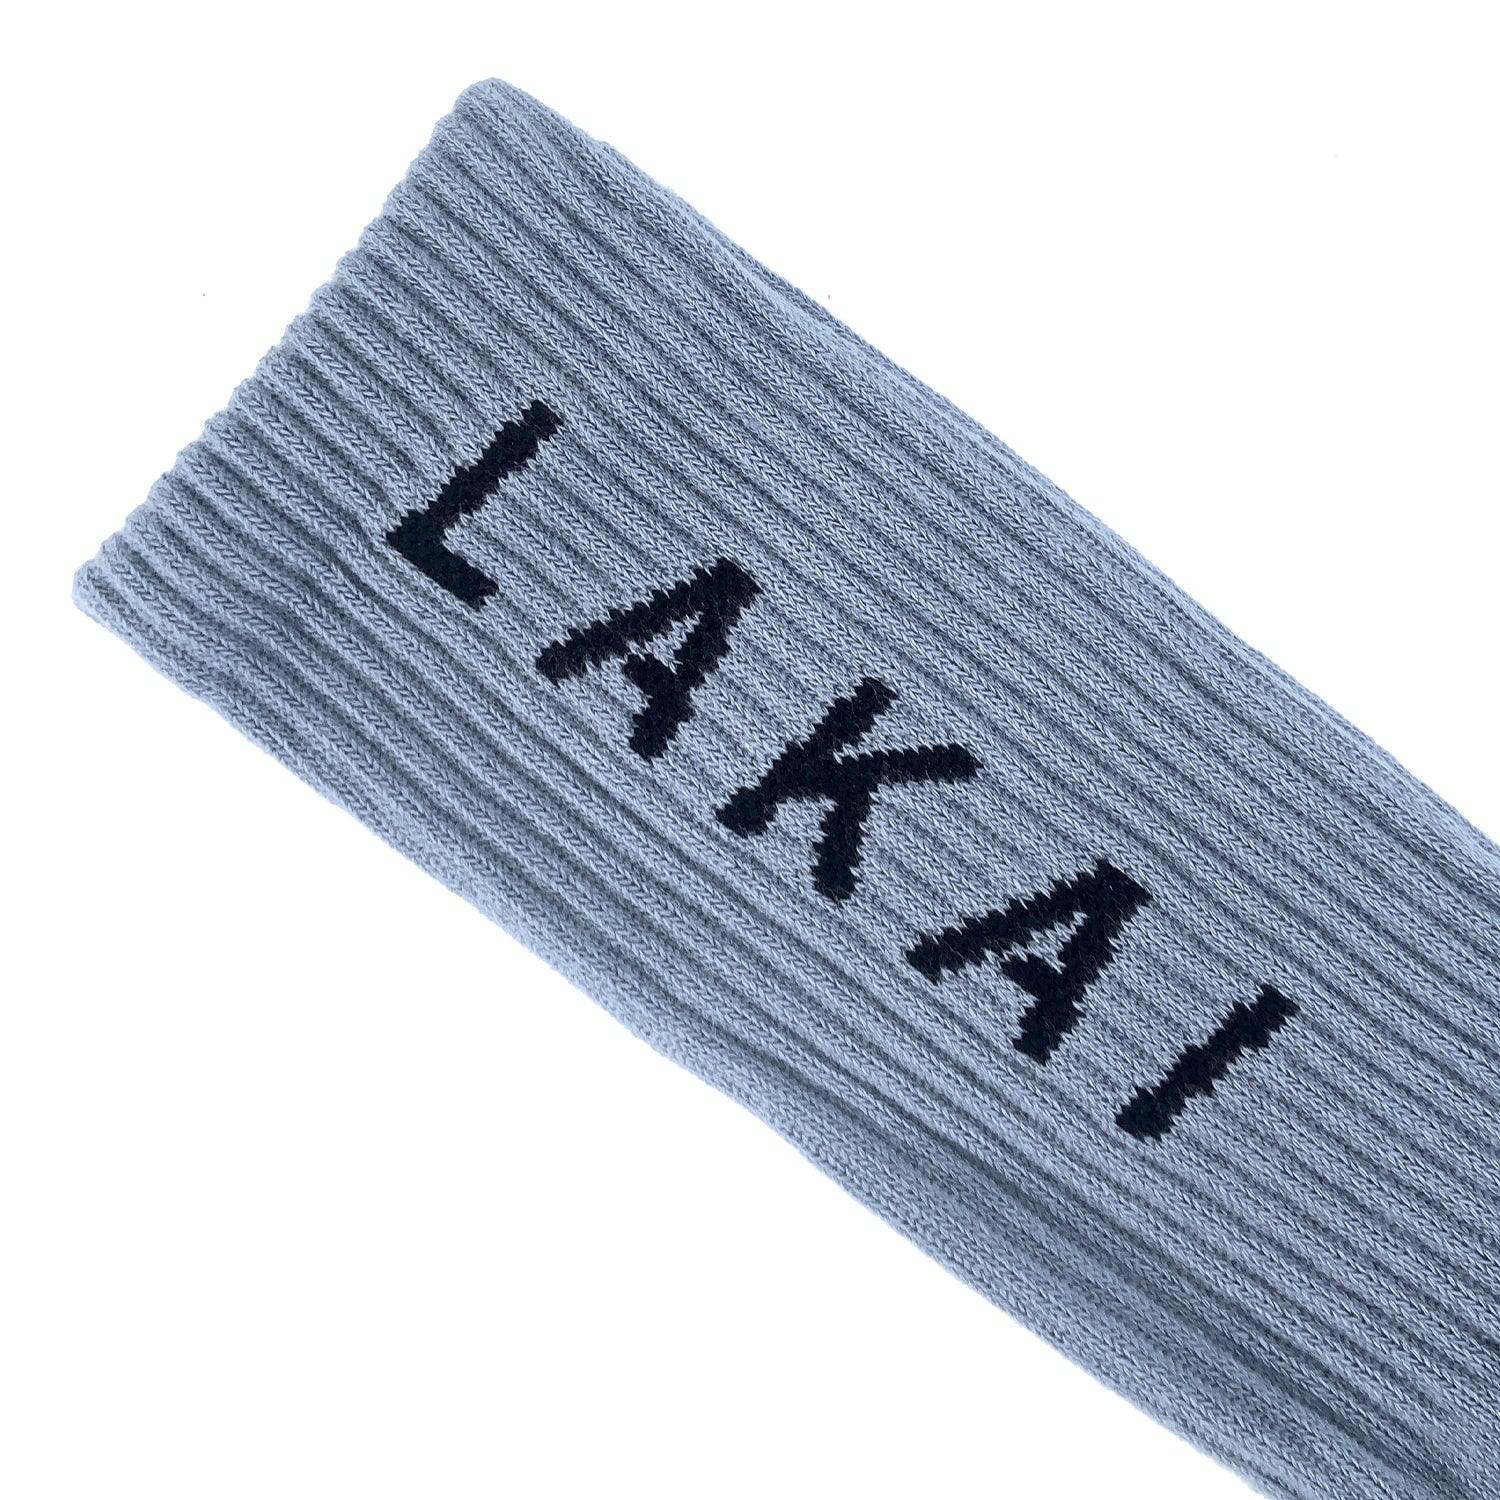 Lakai - Simple Crew Socks - Muted Blue - Prime Delux Store